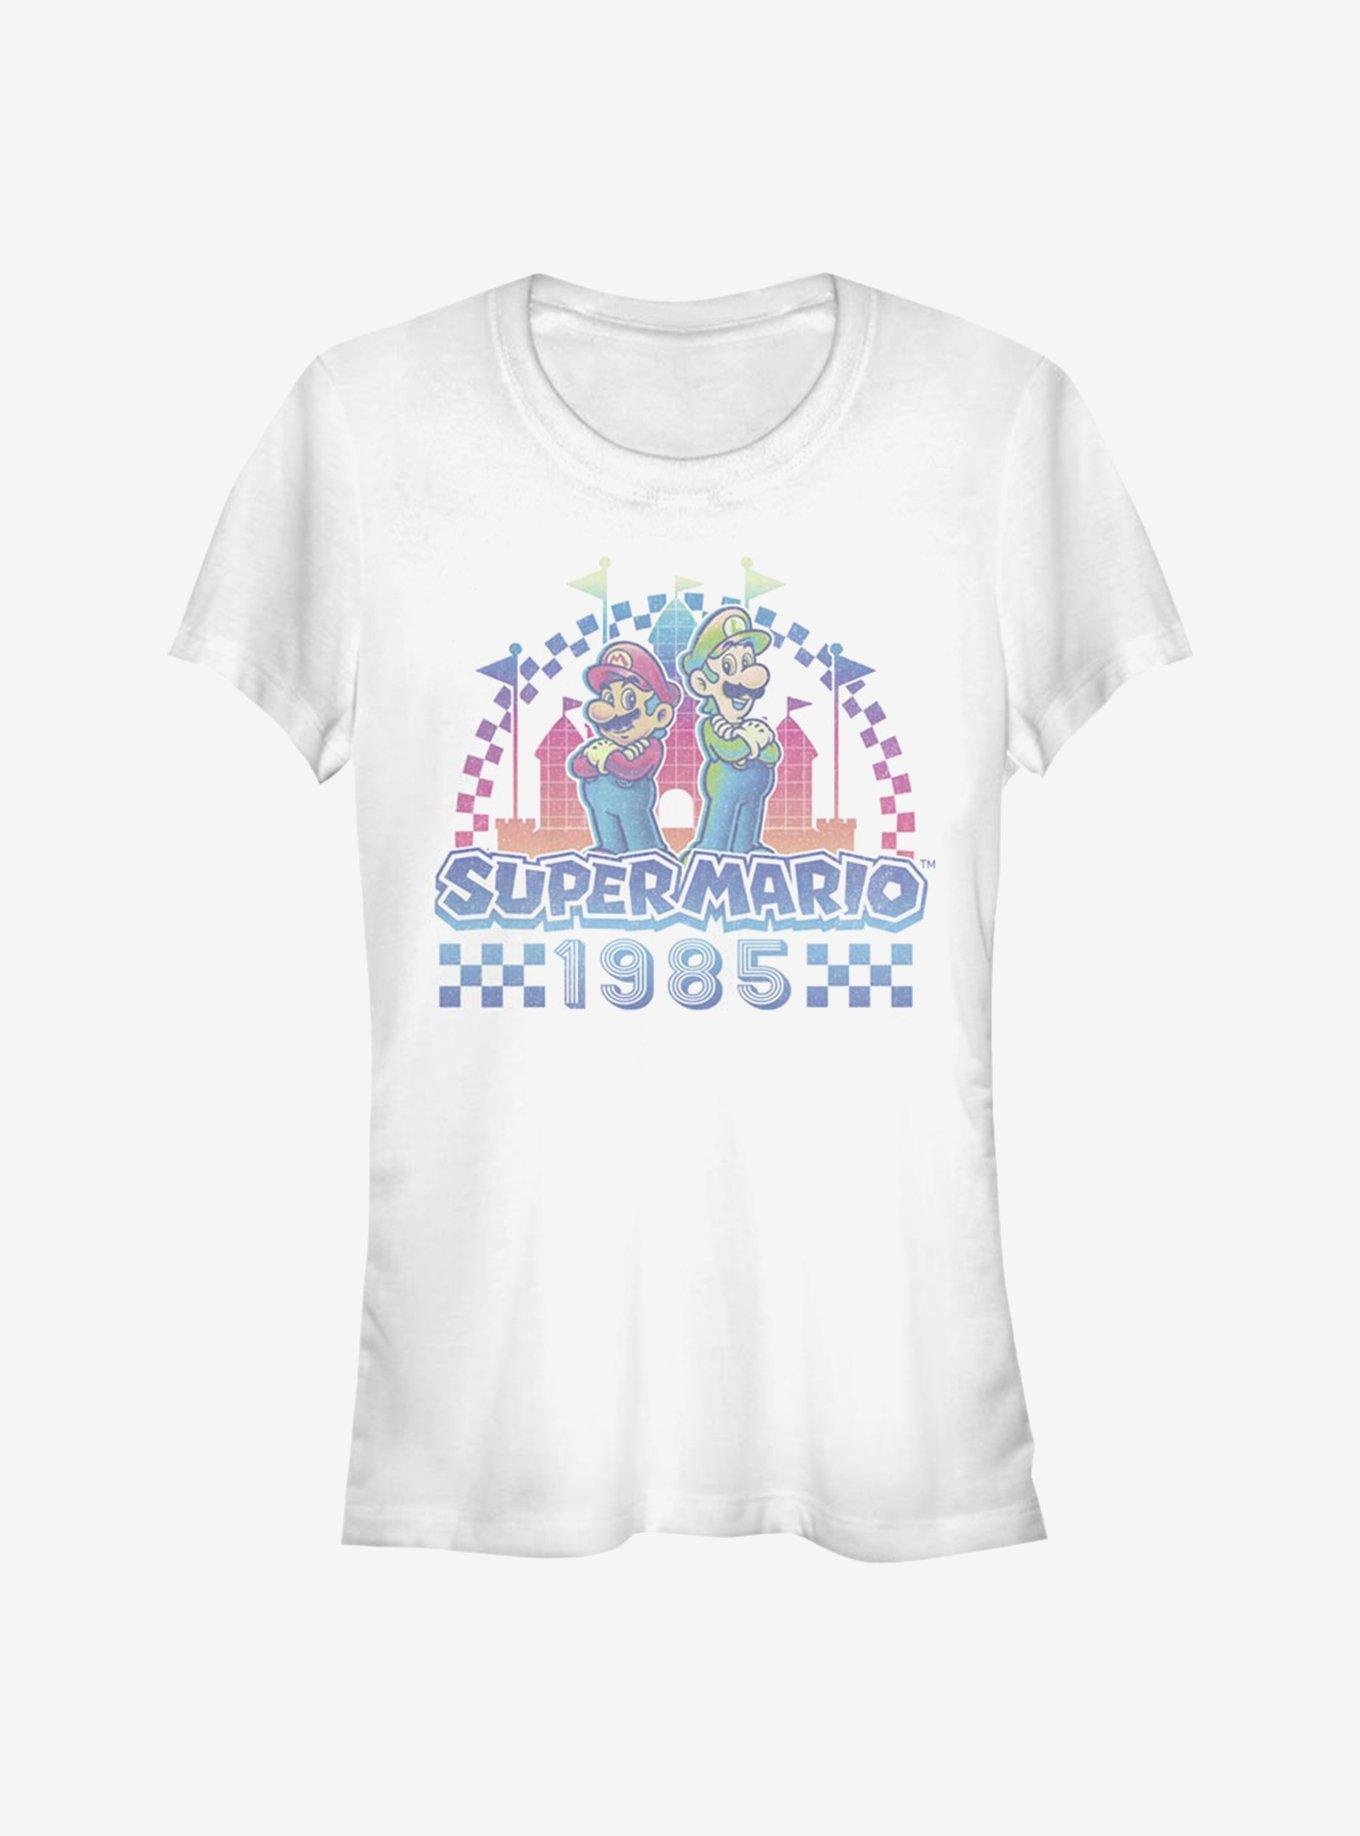 Super Mario Super 1985 Wave Girls T-Shirt, WHITE, hi-res